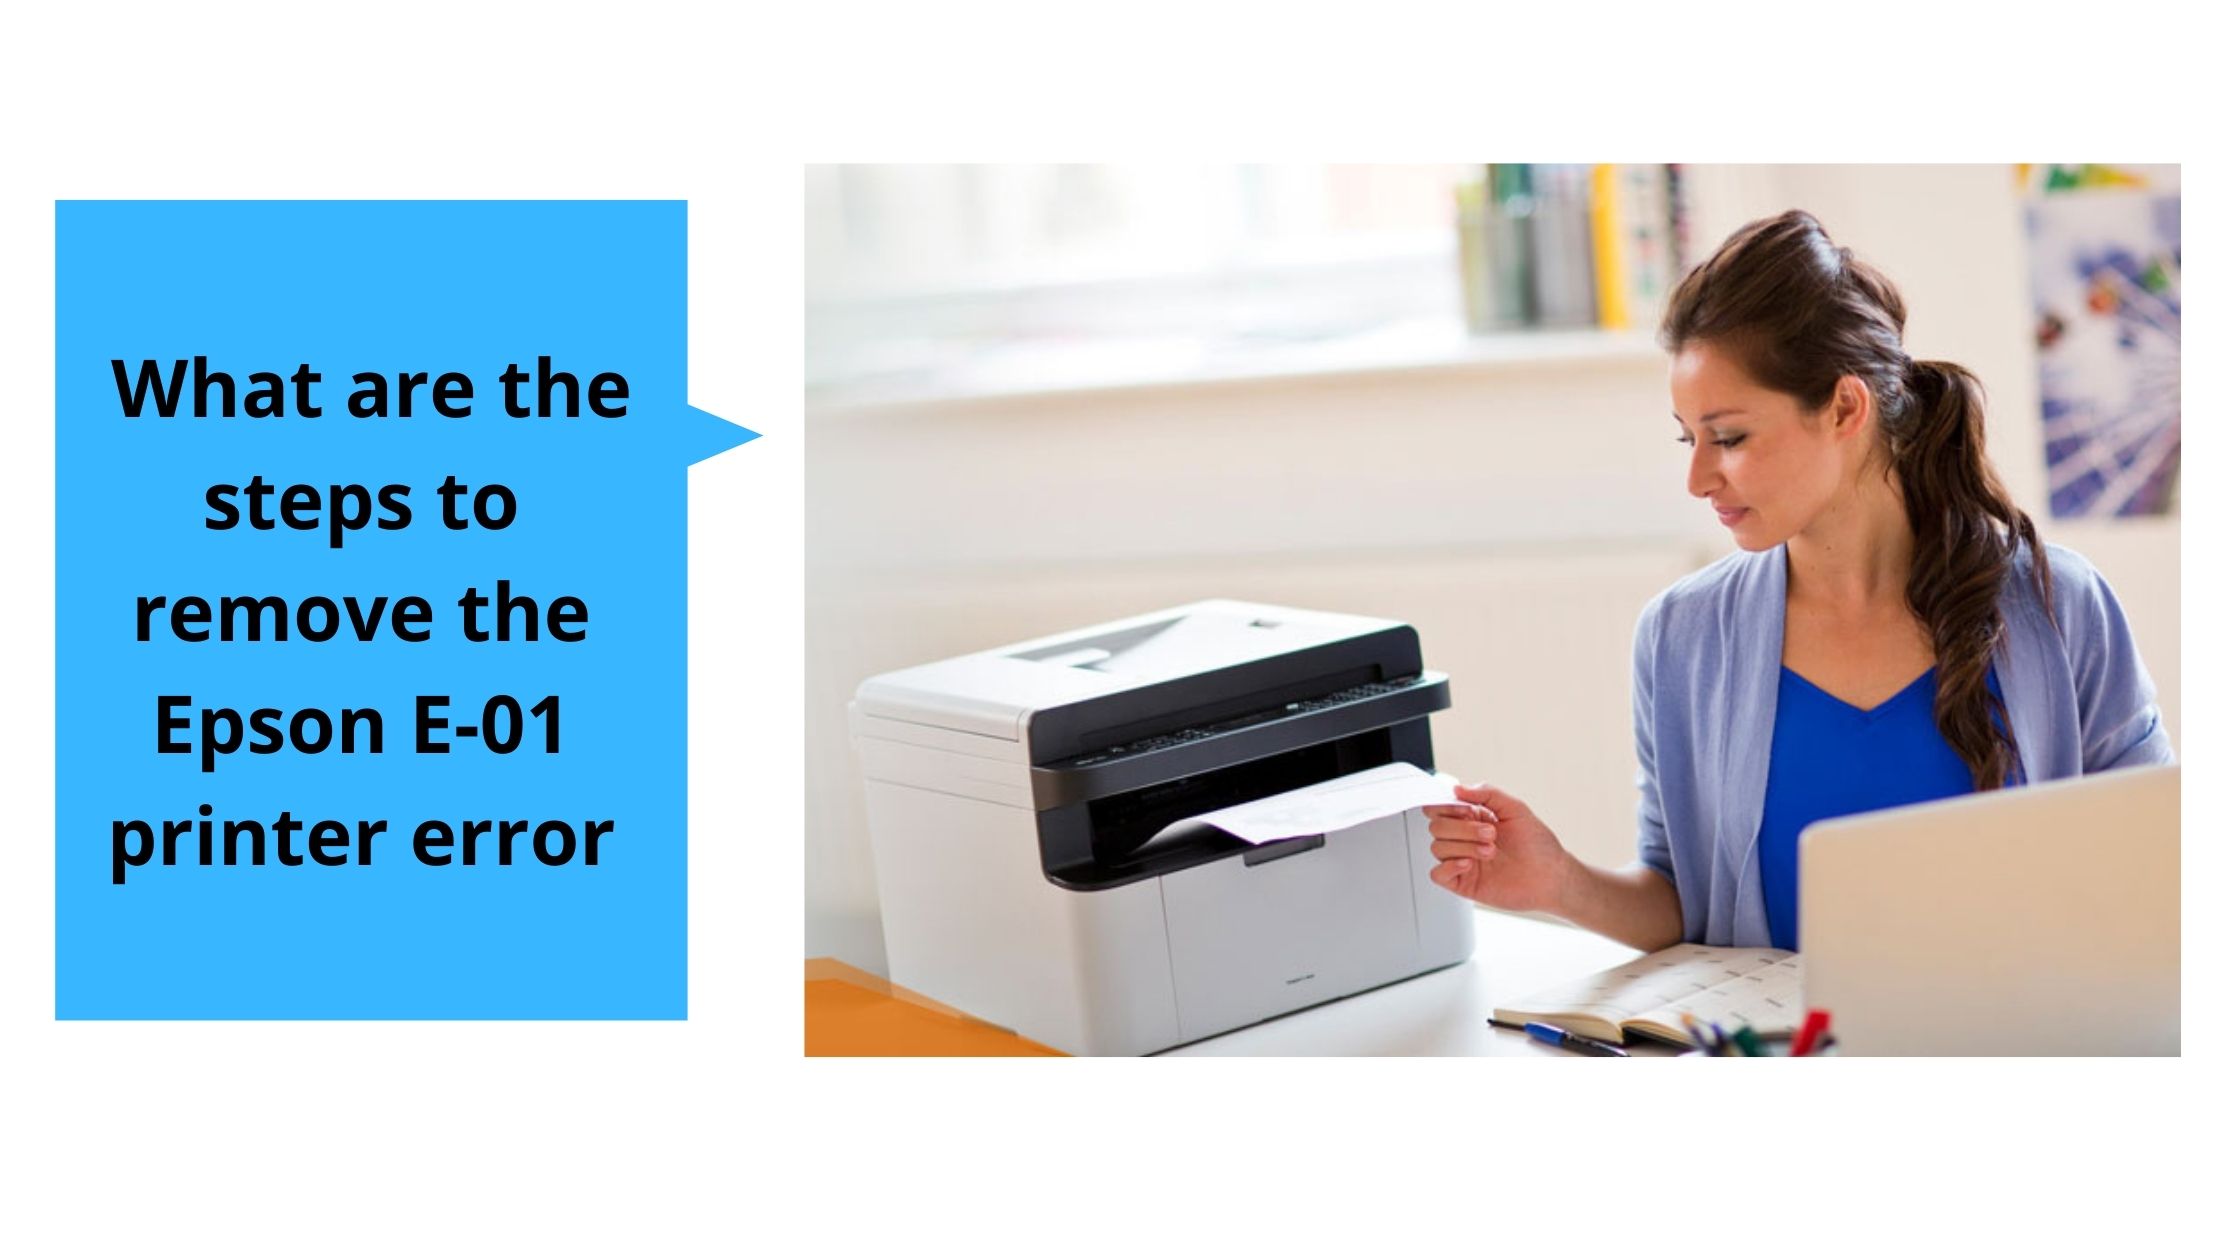 What are the steps to remove the Epson E-01 printer error